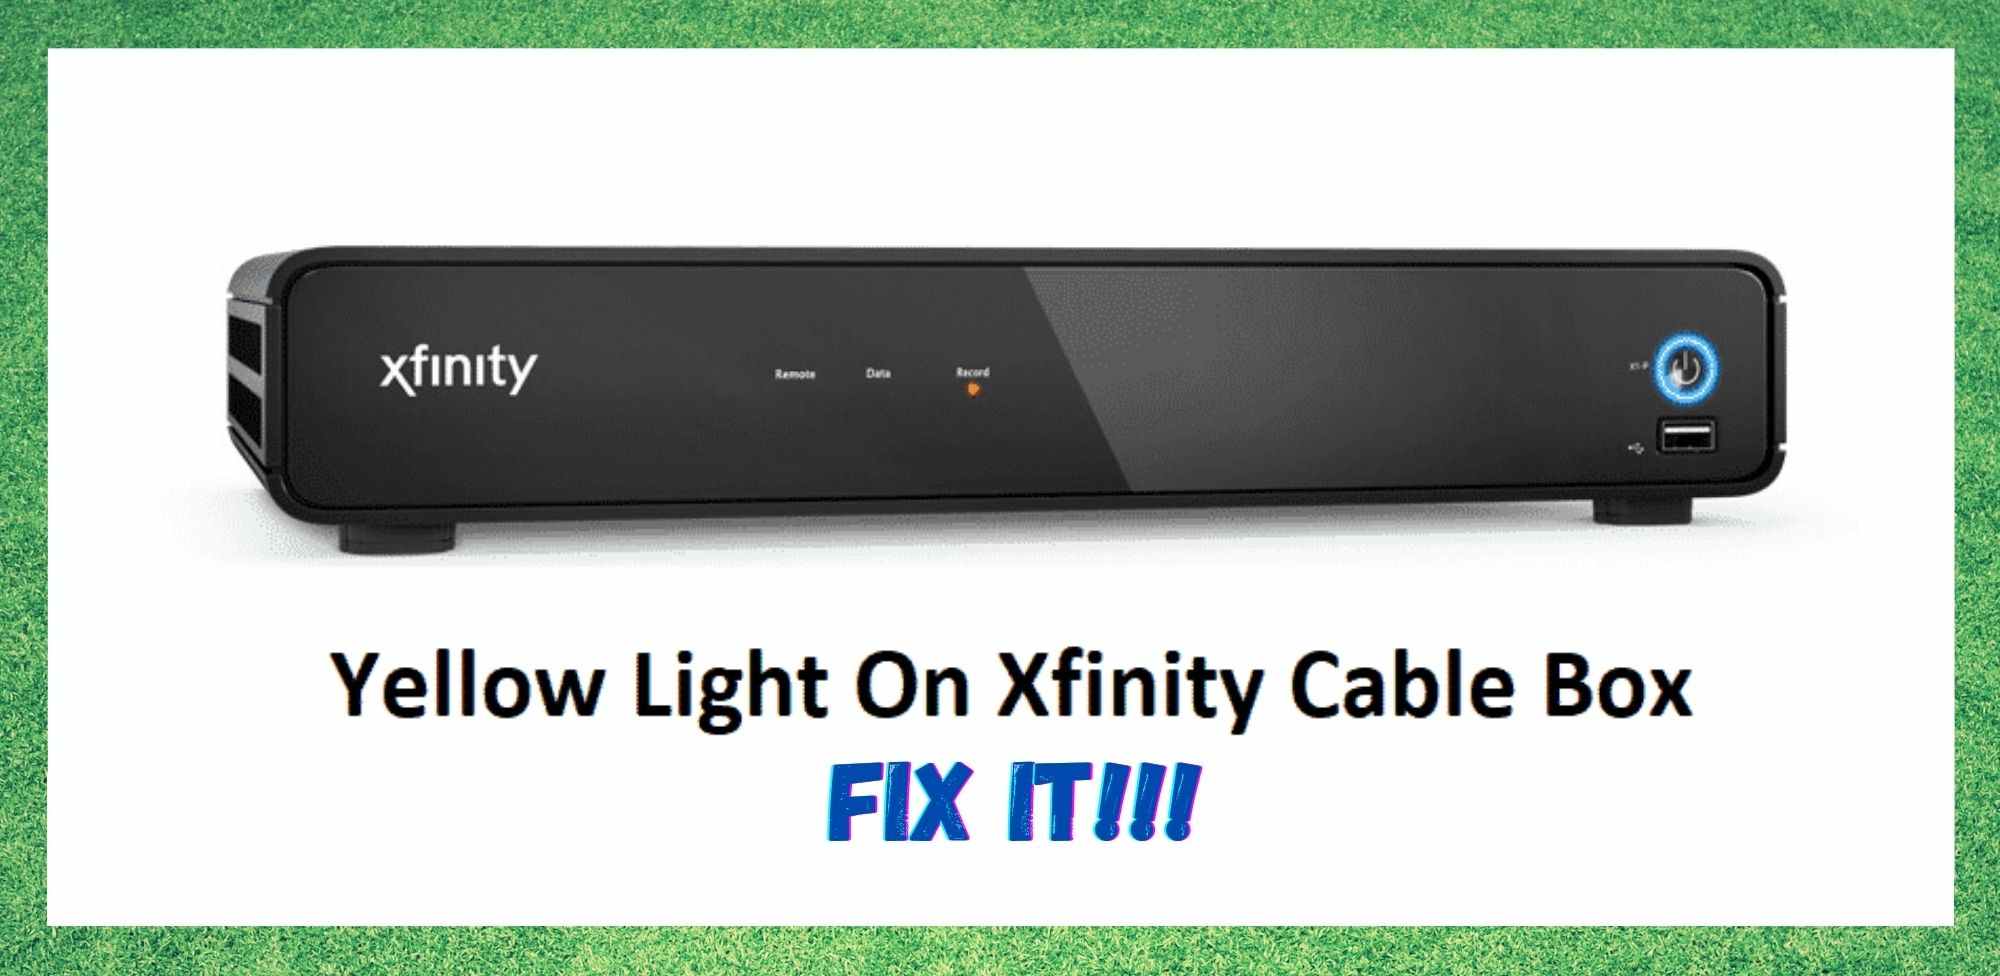 5 Cara Membetulkan Lampu Kuning Pada Kotak Kabel Xfinity